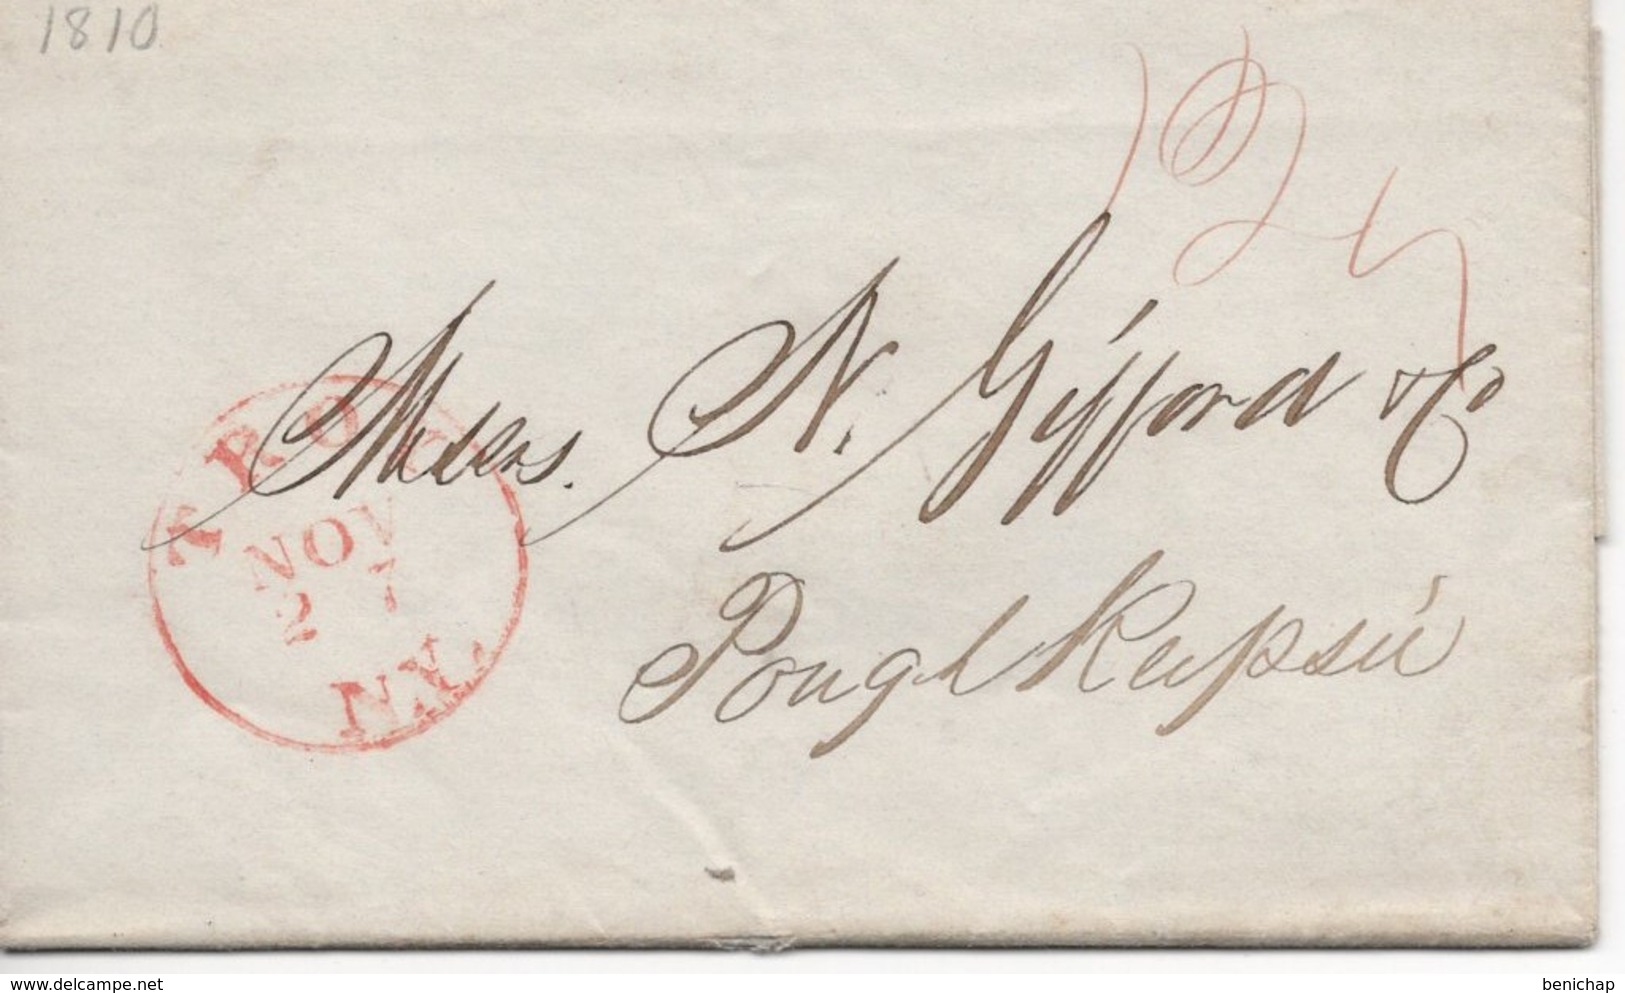 (R15) LAC 27 Nov 1810 - Stampless -  Paid 12 1/2 C Rate - TROY (N.Y.) TO POUGHKEEPSIE (P.A.). - …-1845 Voorfilatelie